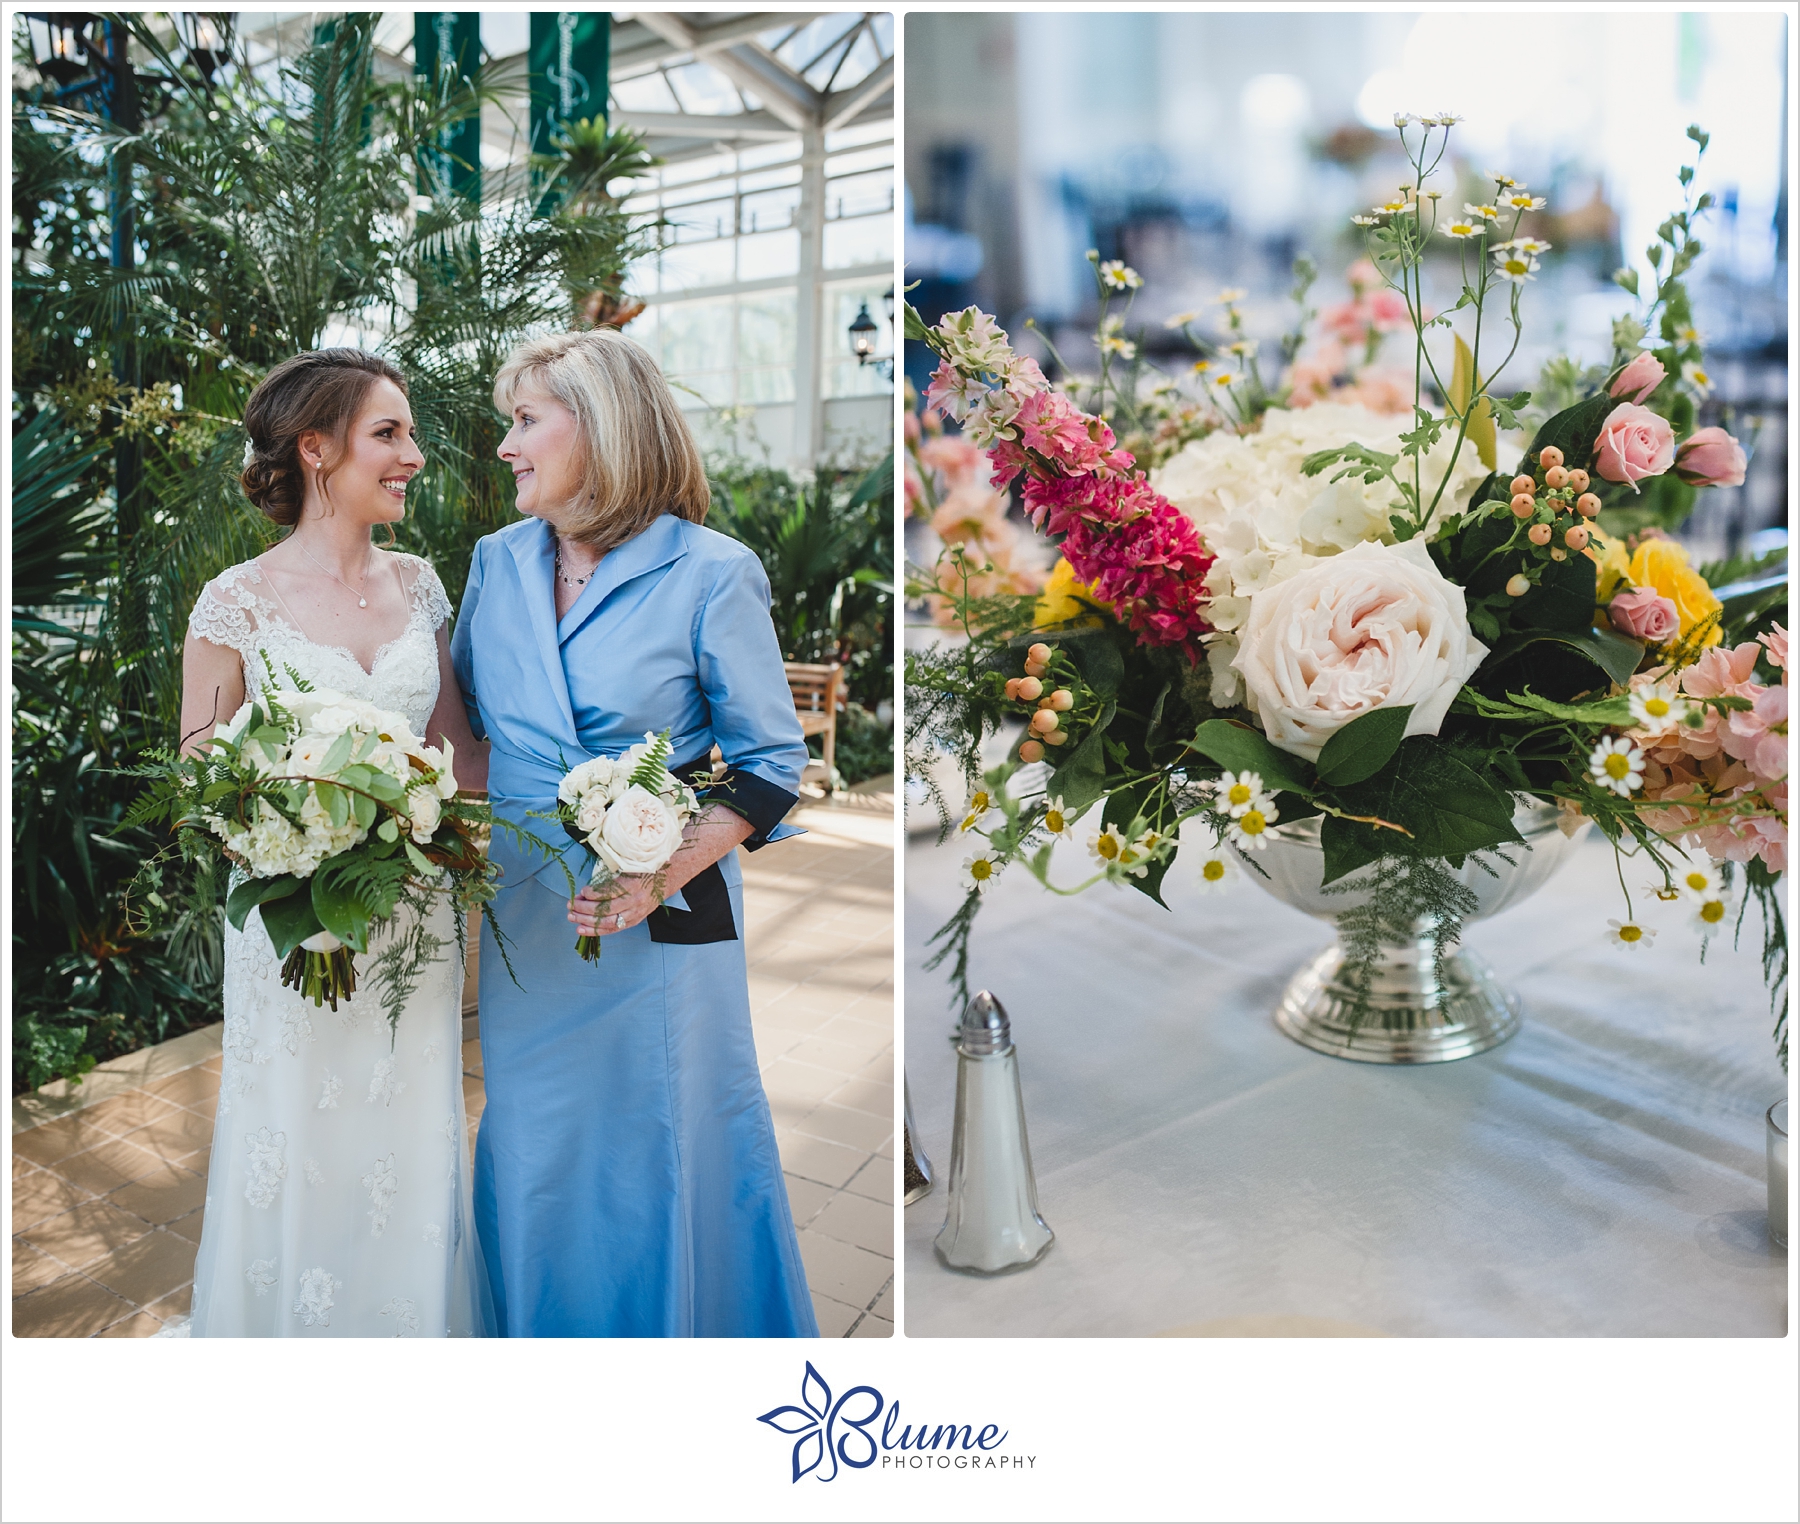 Elijana Cosmetics,athens botanical gardens,athens wedding photographer,athens wedding photography,state botanical garden of georgia,terrace room,